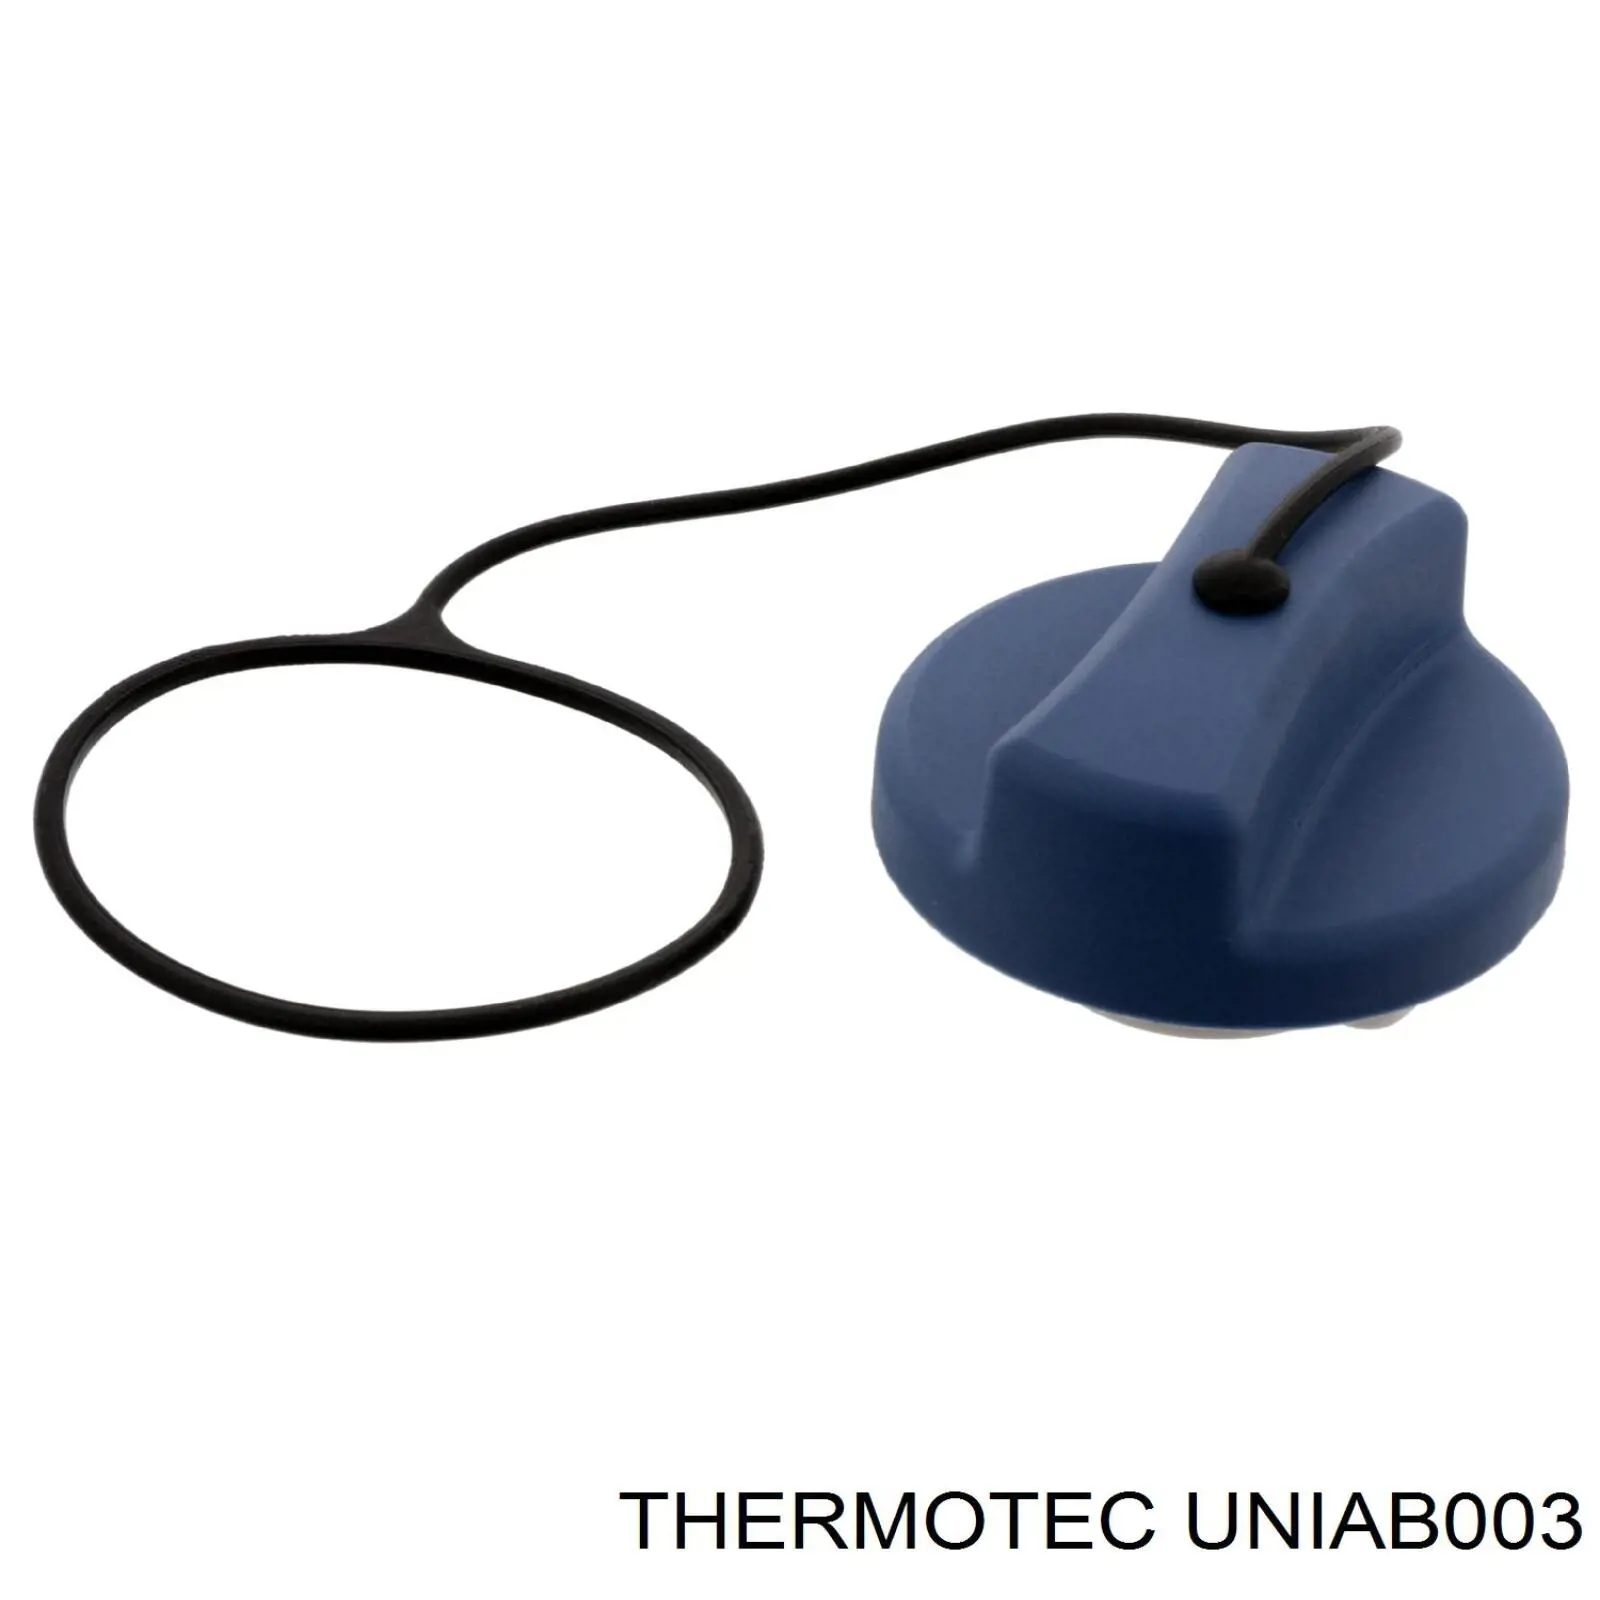 UNI-AB-003 Thermotec tapón depósito ad blue